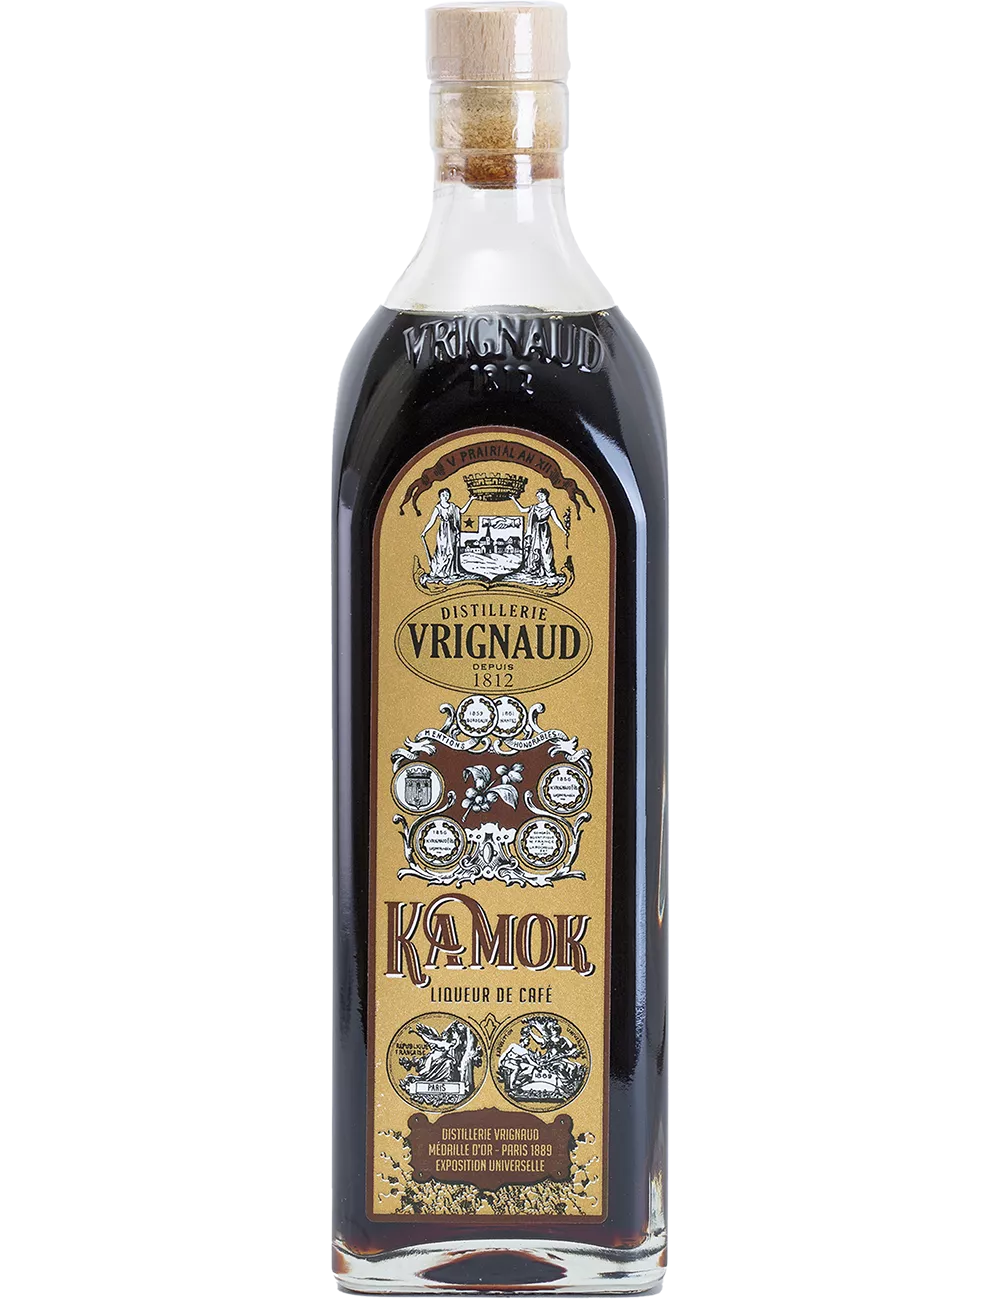 Vrignaud - Café Kamok - Liqueur